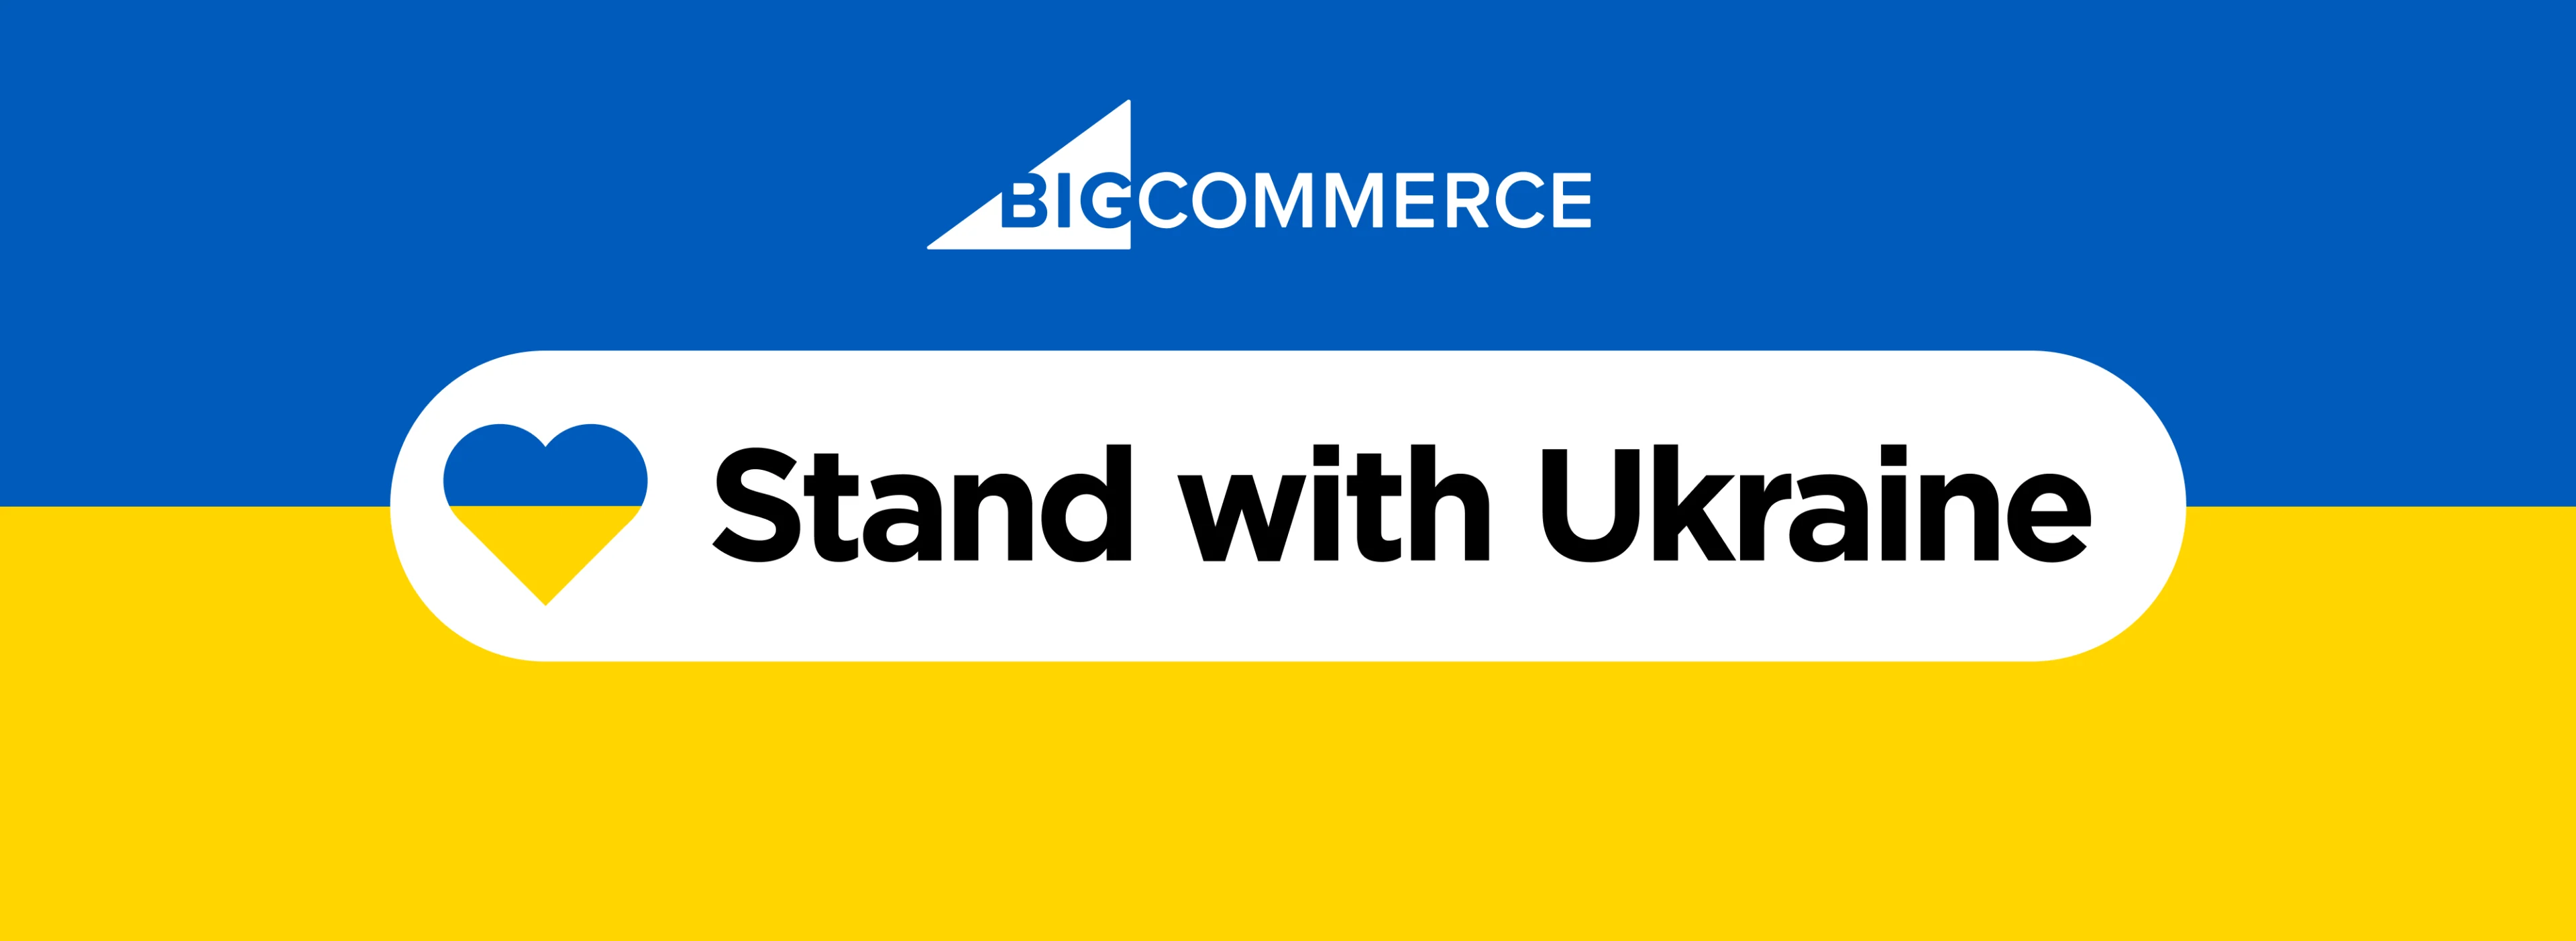 https://cms-wp.bigcommerce.com/wp-content/uploads/2022/12/5534CD-Stand-with-Ukraine-Blog-Header-Image-MT.png